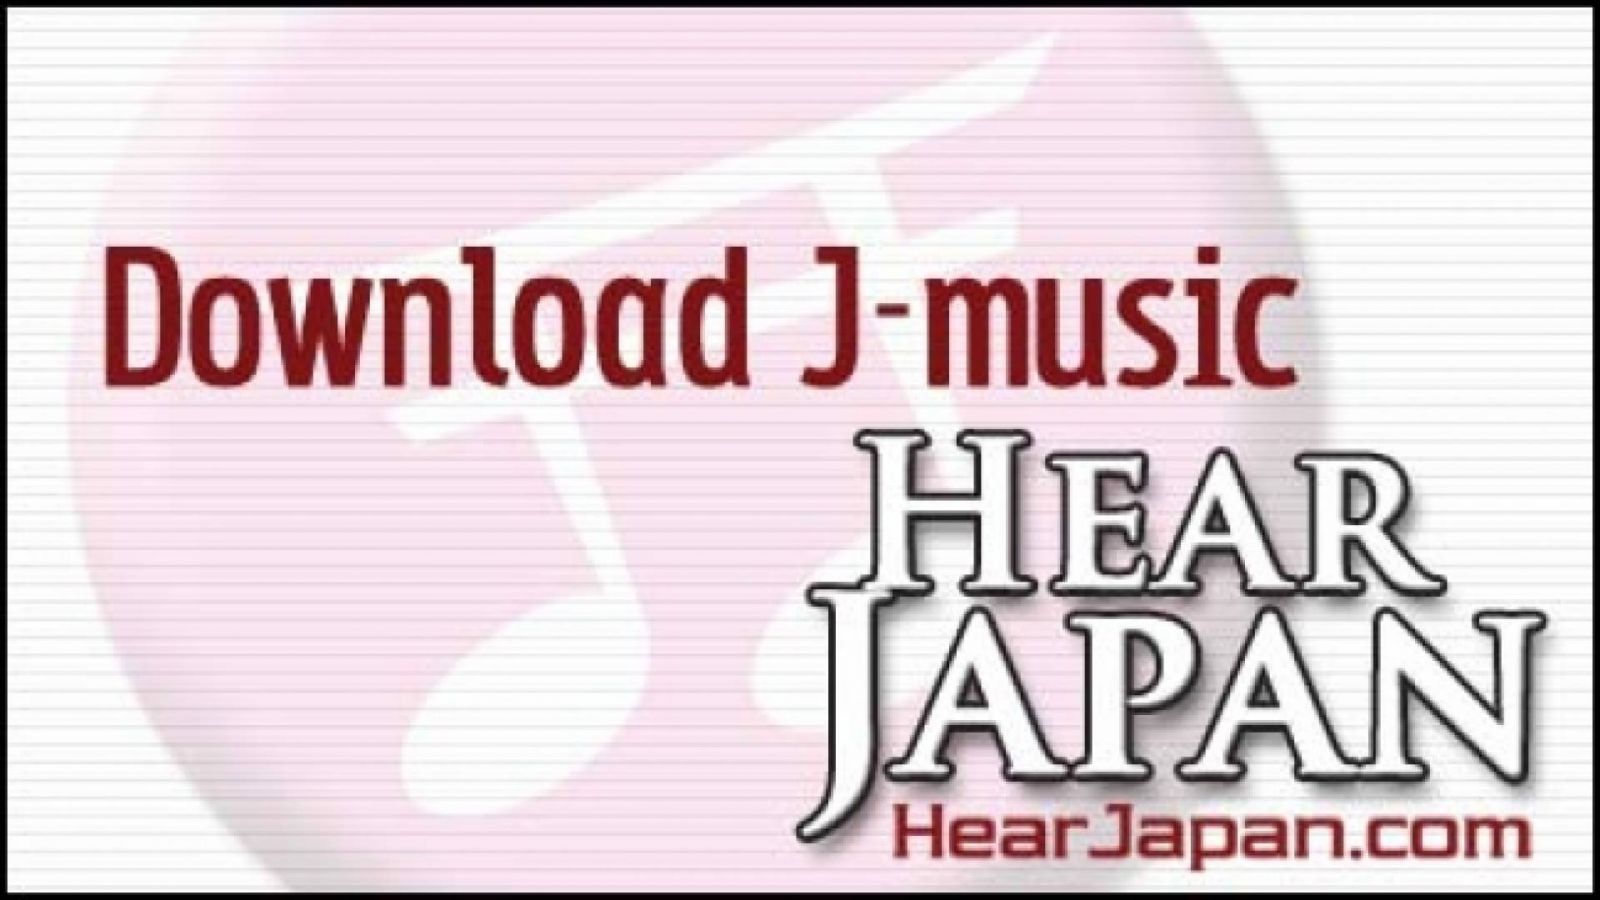 uhnellys EP on HearJapan © HearJapan